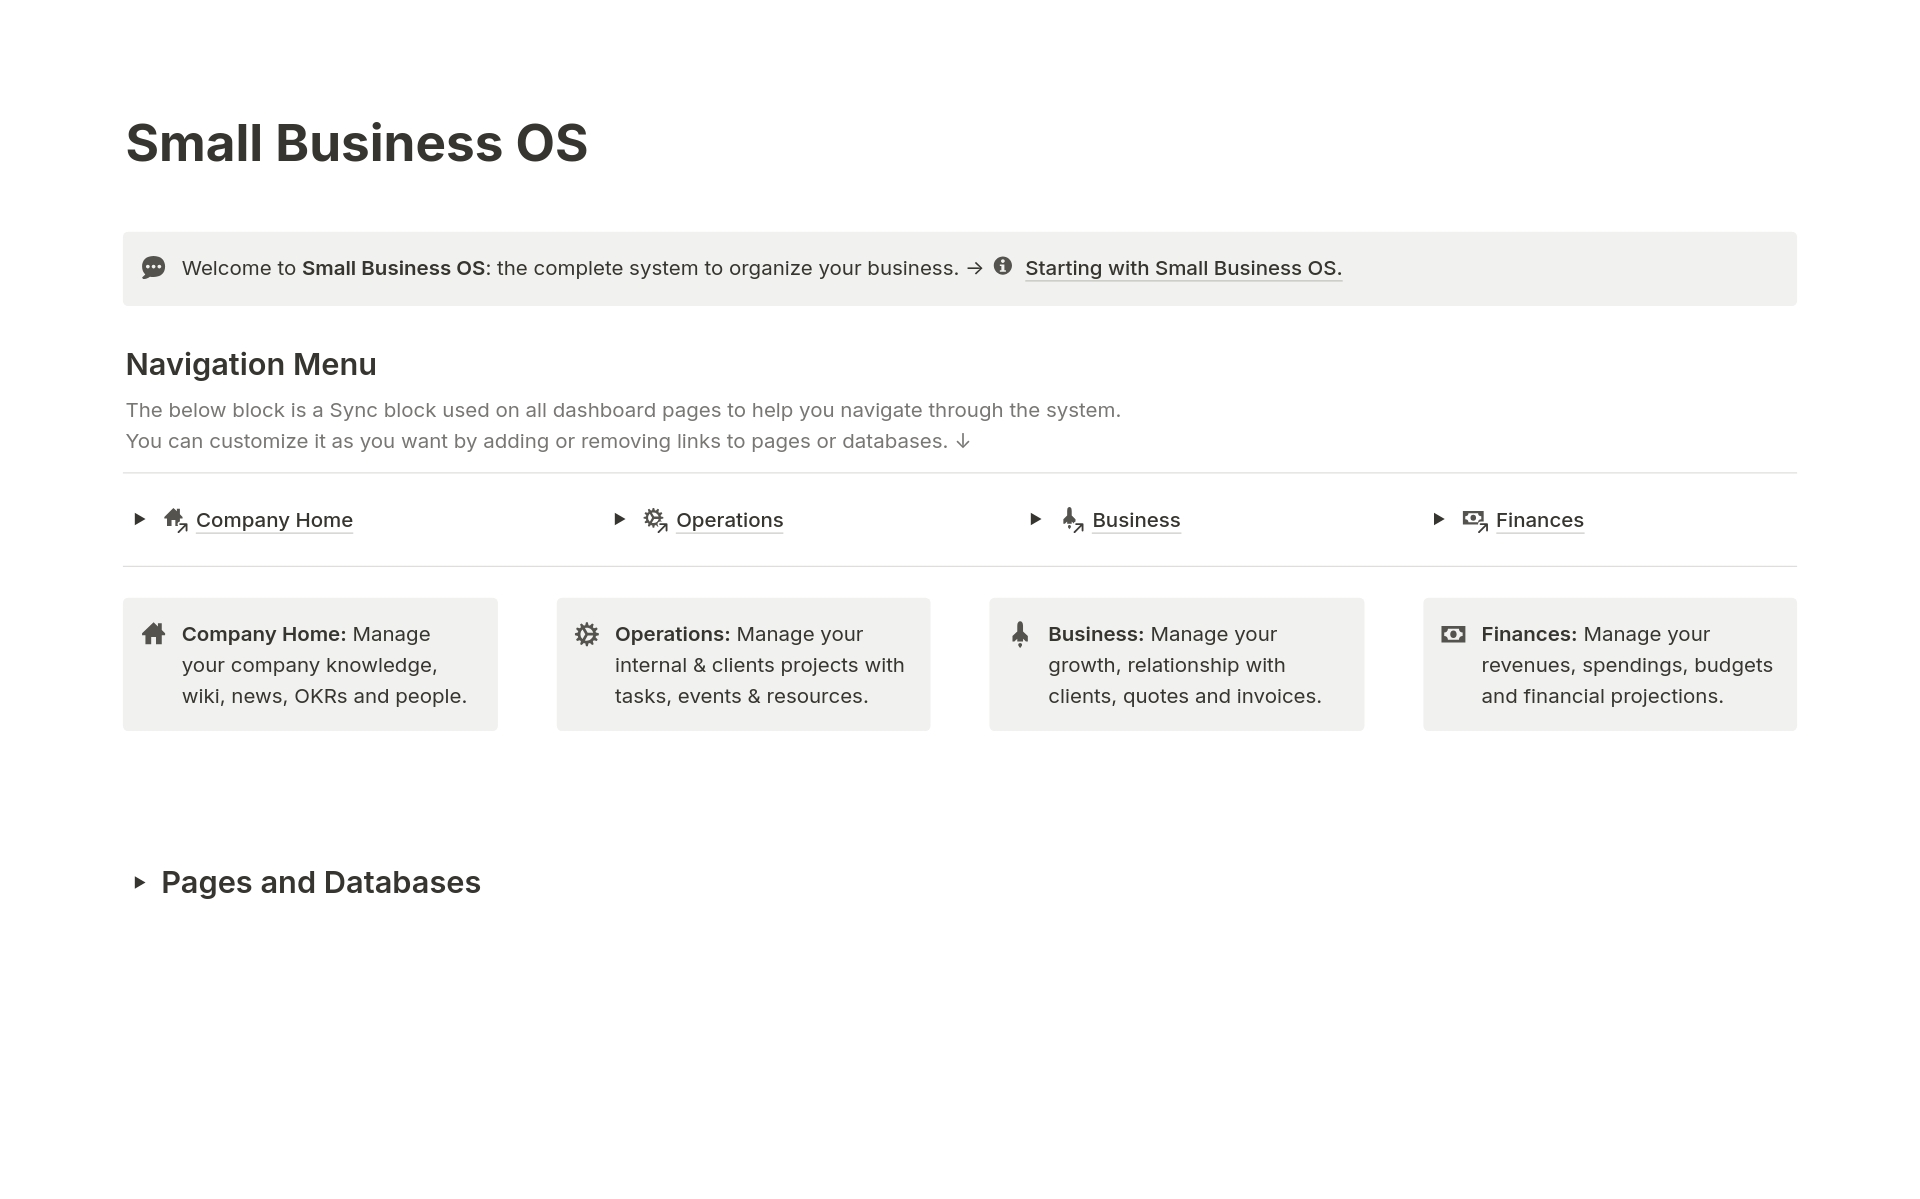 Vista previa de una plantilla para Small Business OS